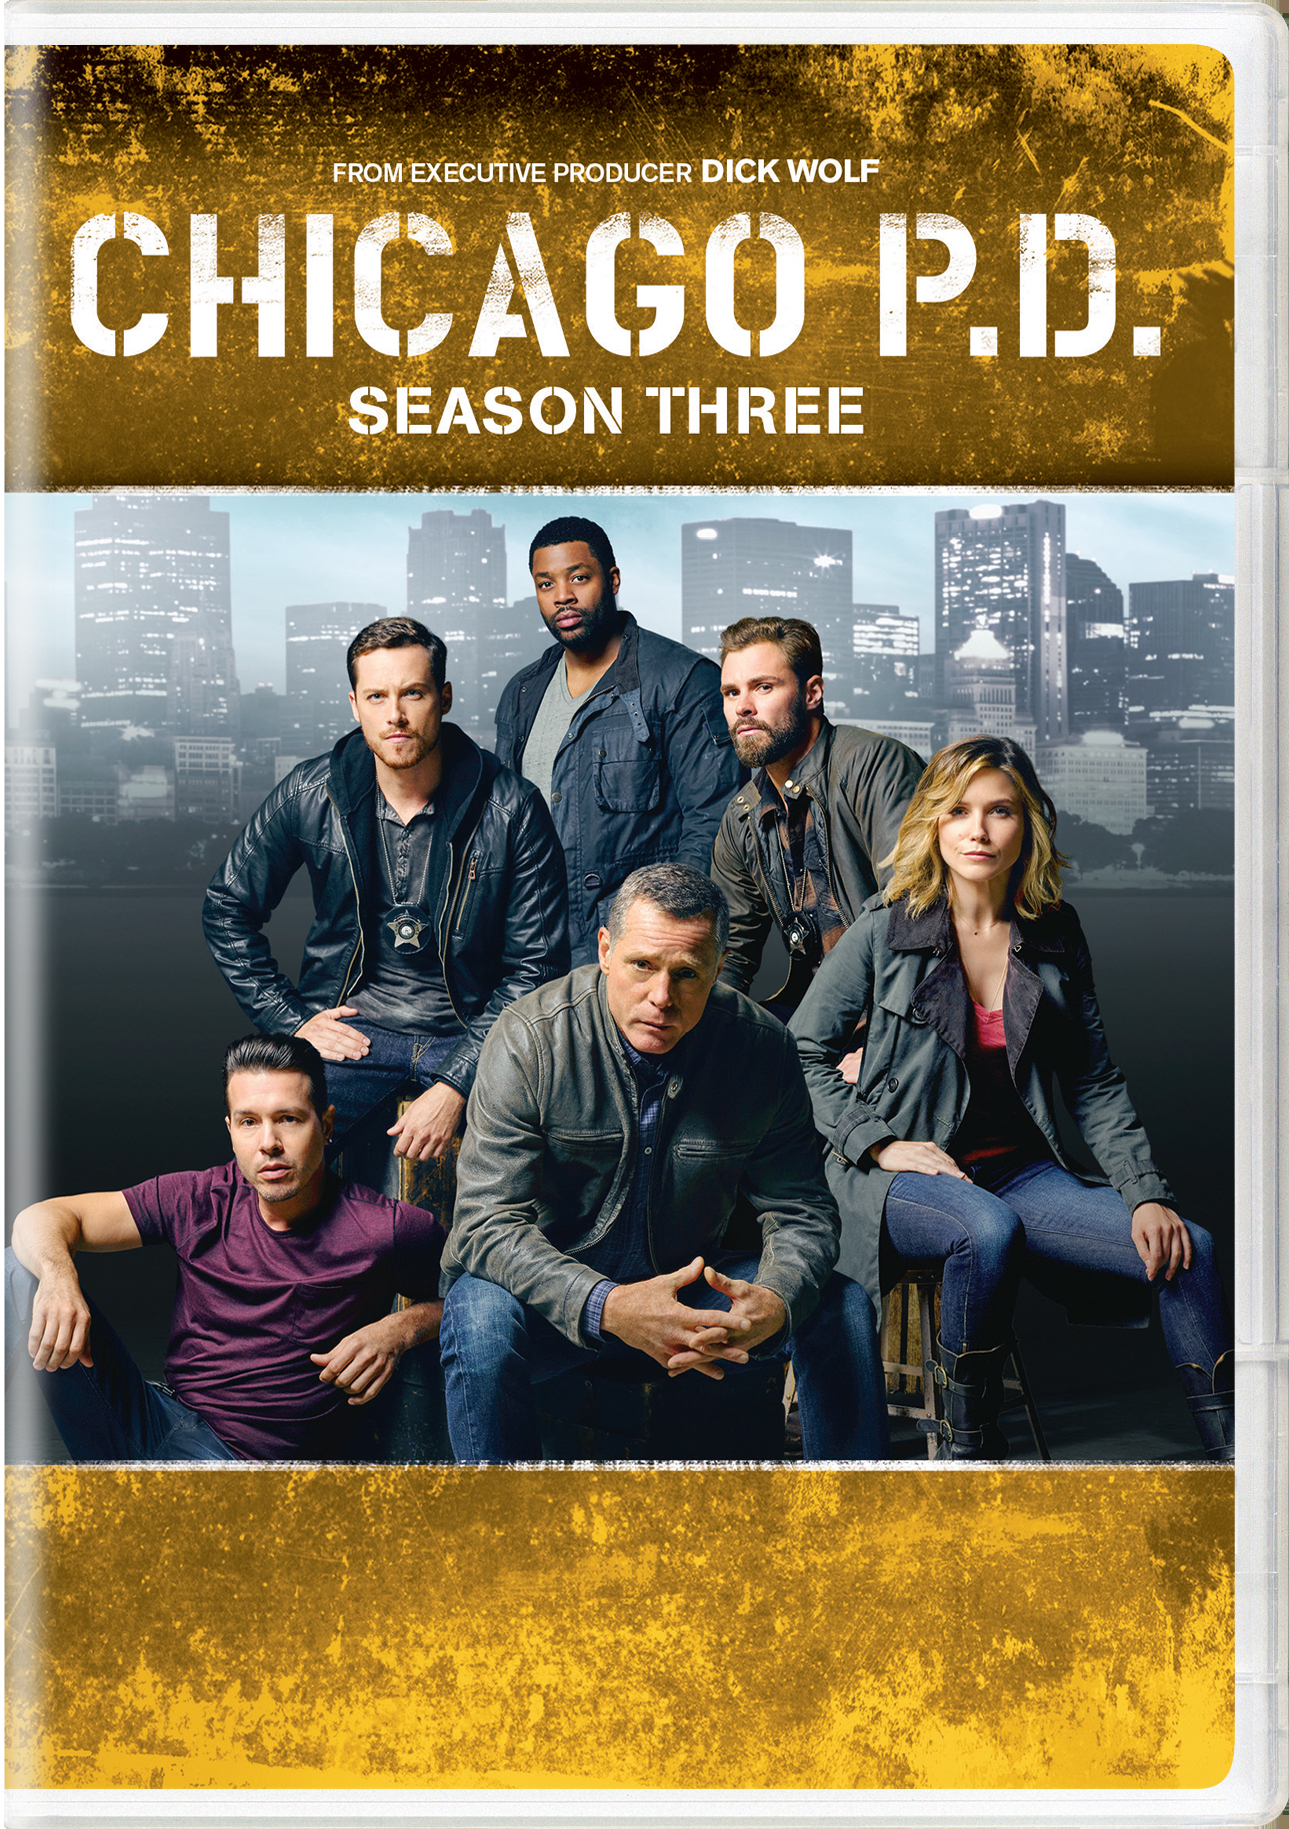 Chicago P.D.: Season Three - DVD   - Drama Television On DVD - TV Shows On GRUV